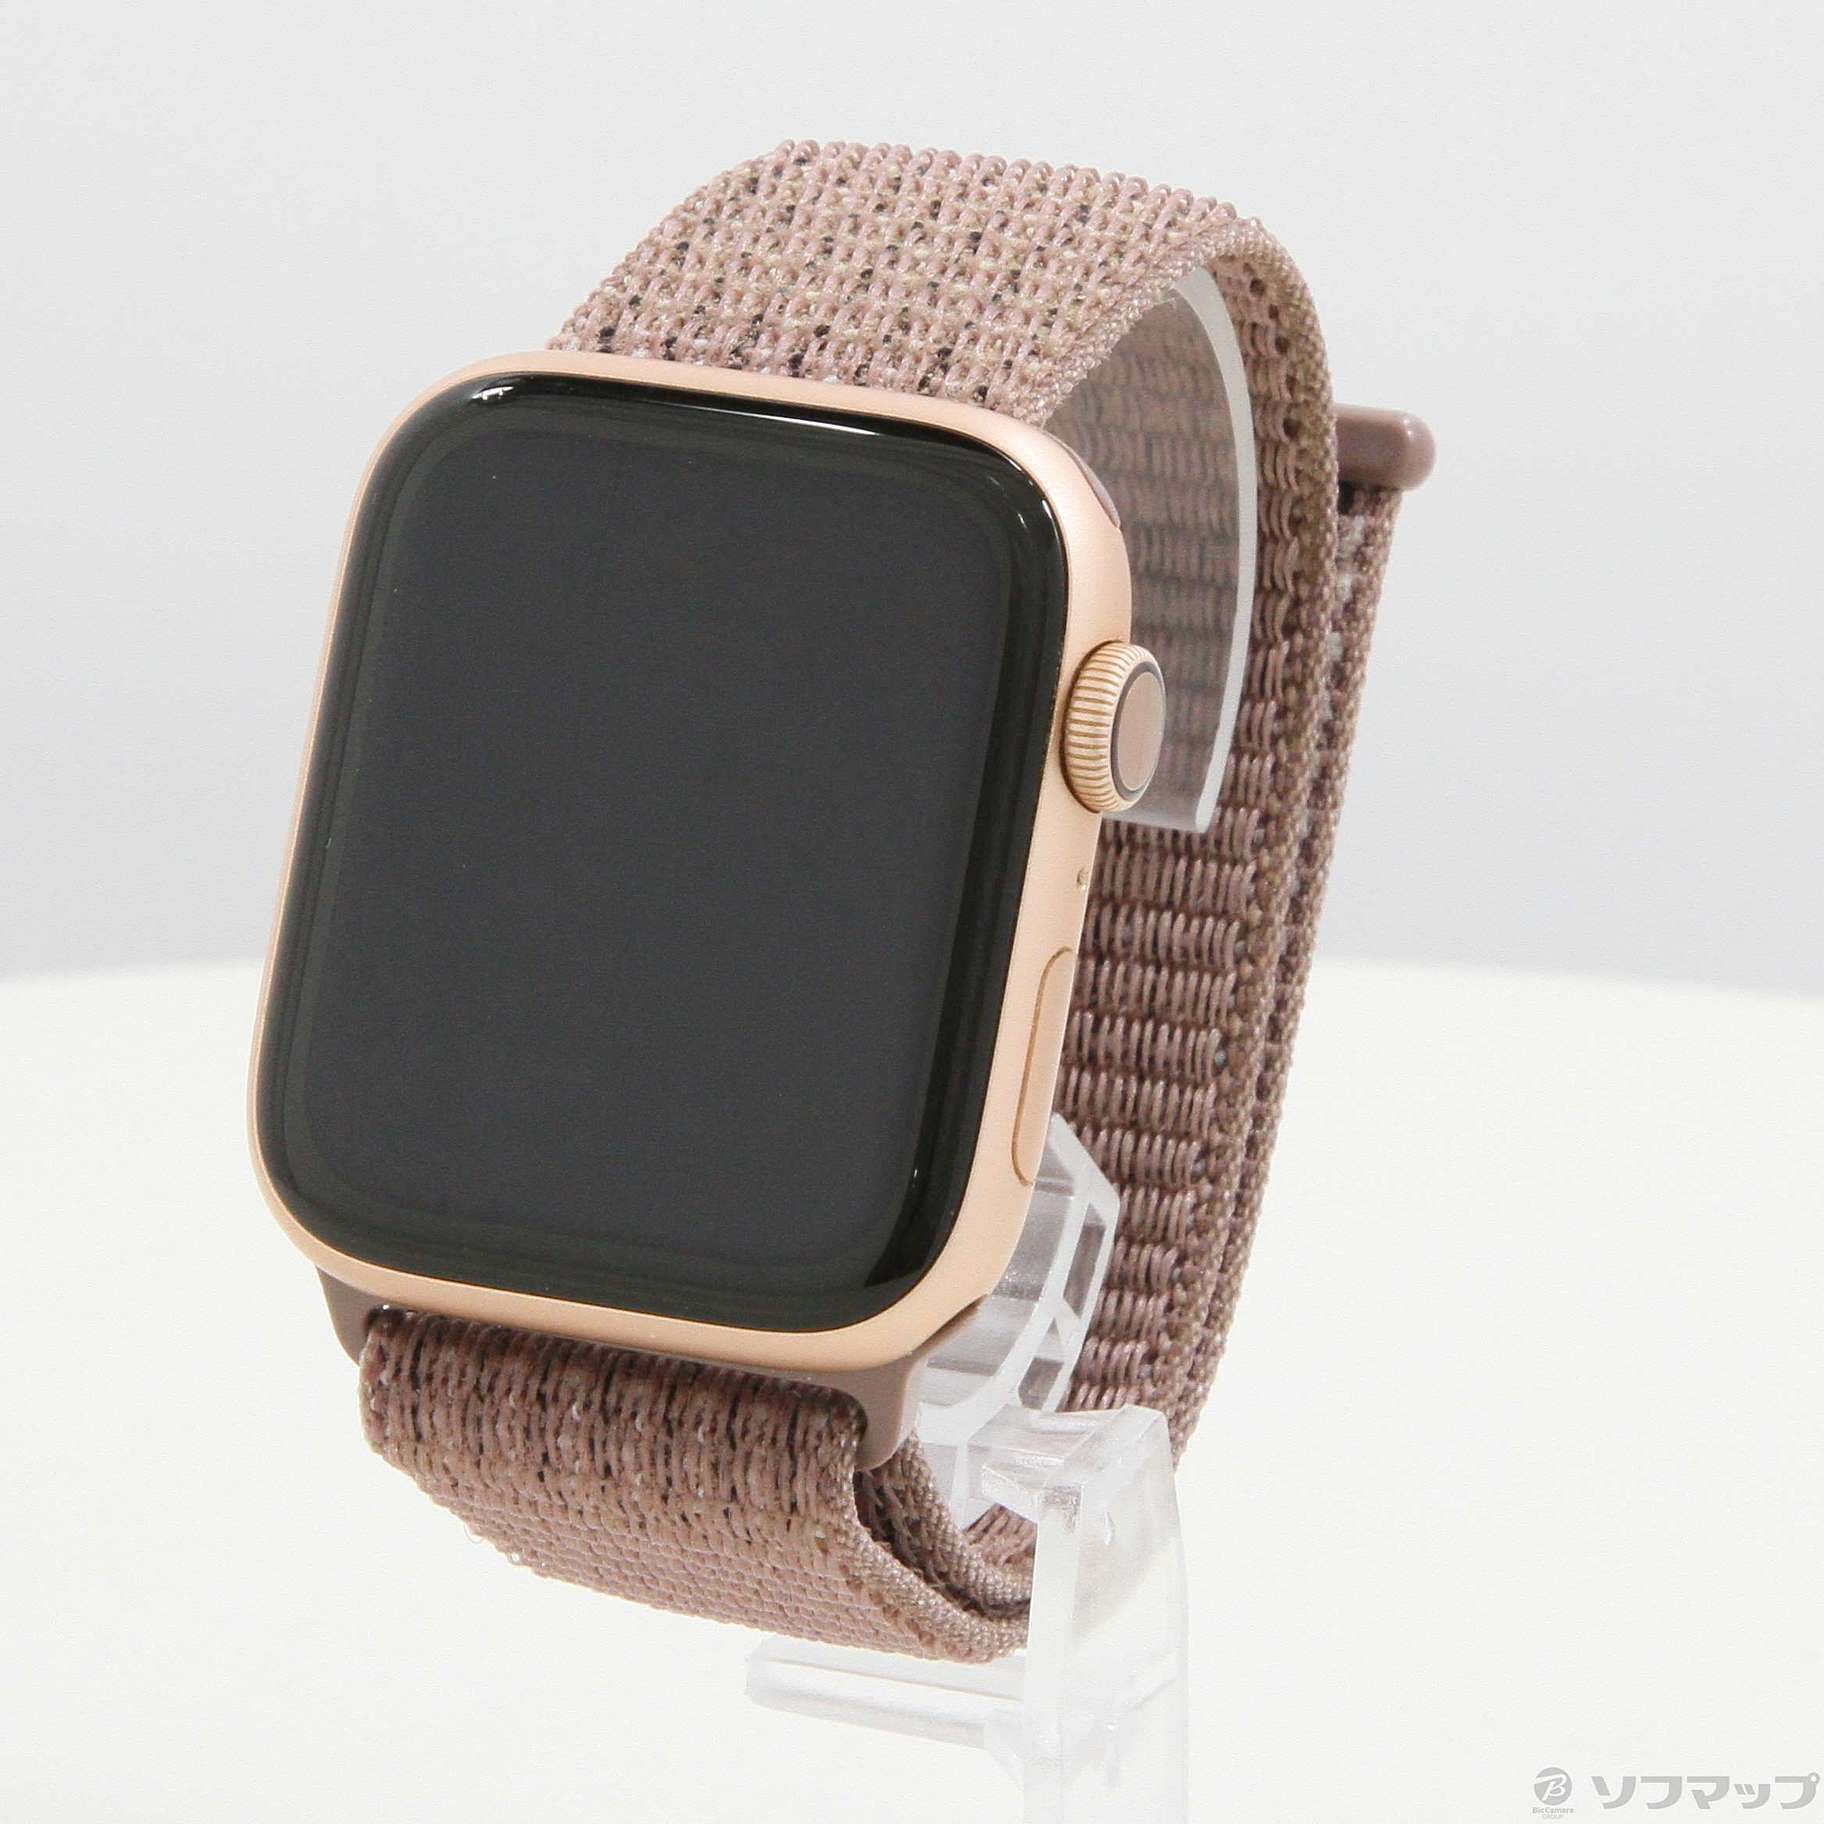 【Apple】Apple Watch Series 4GPS gold 44mm